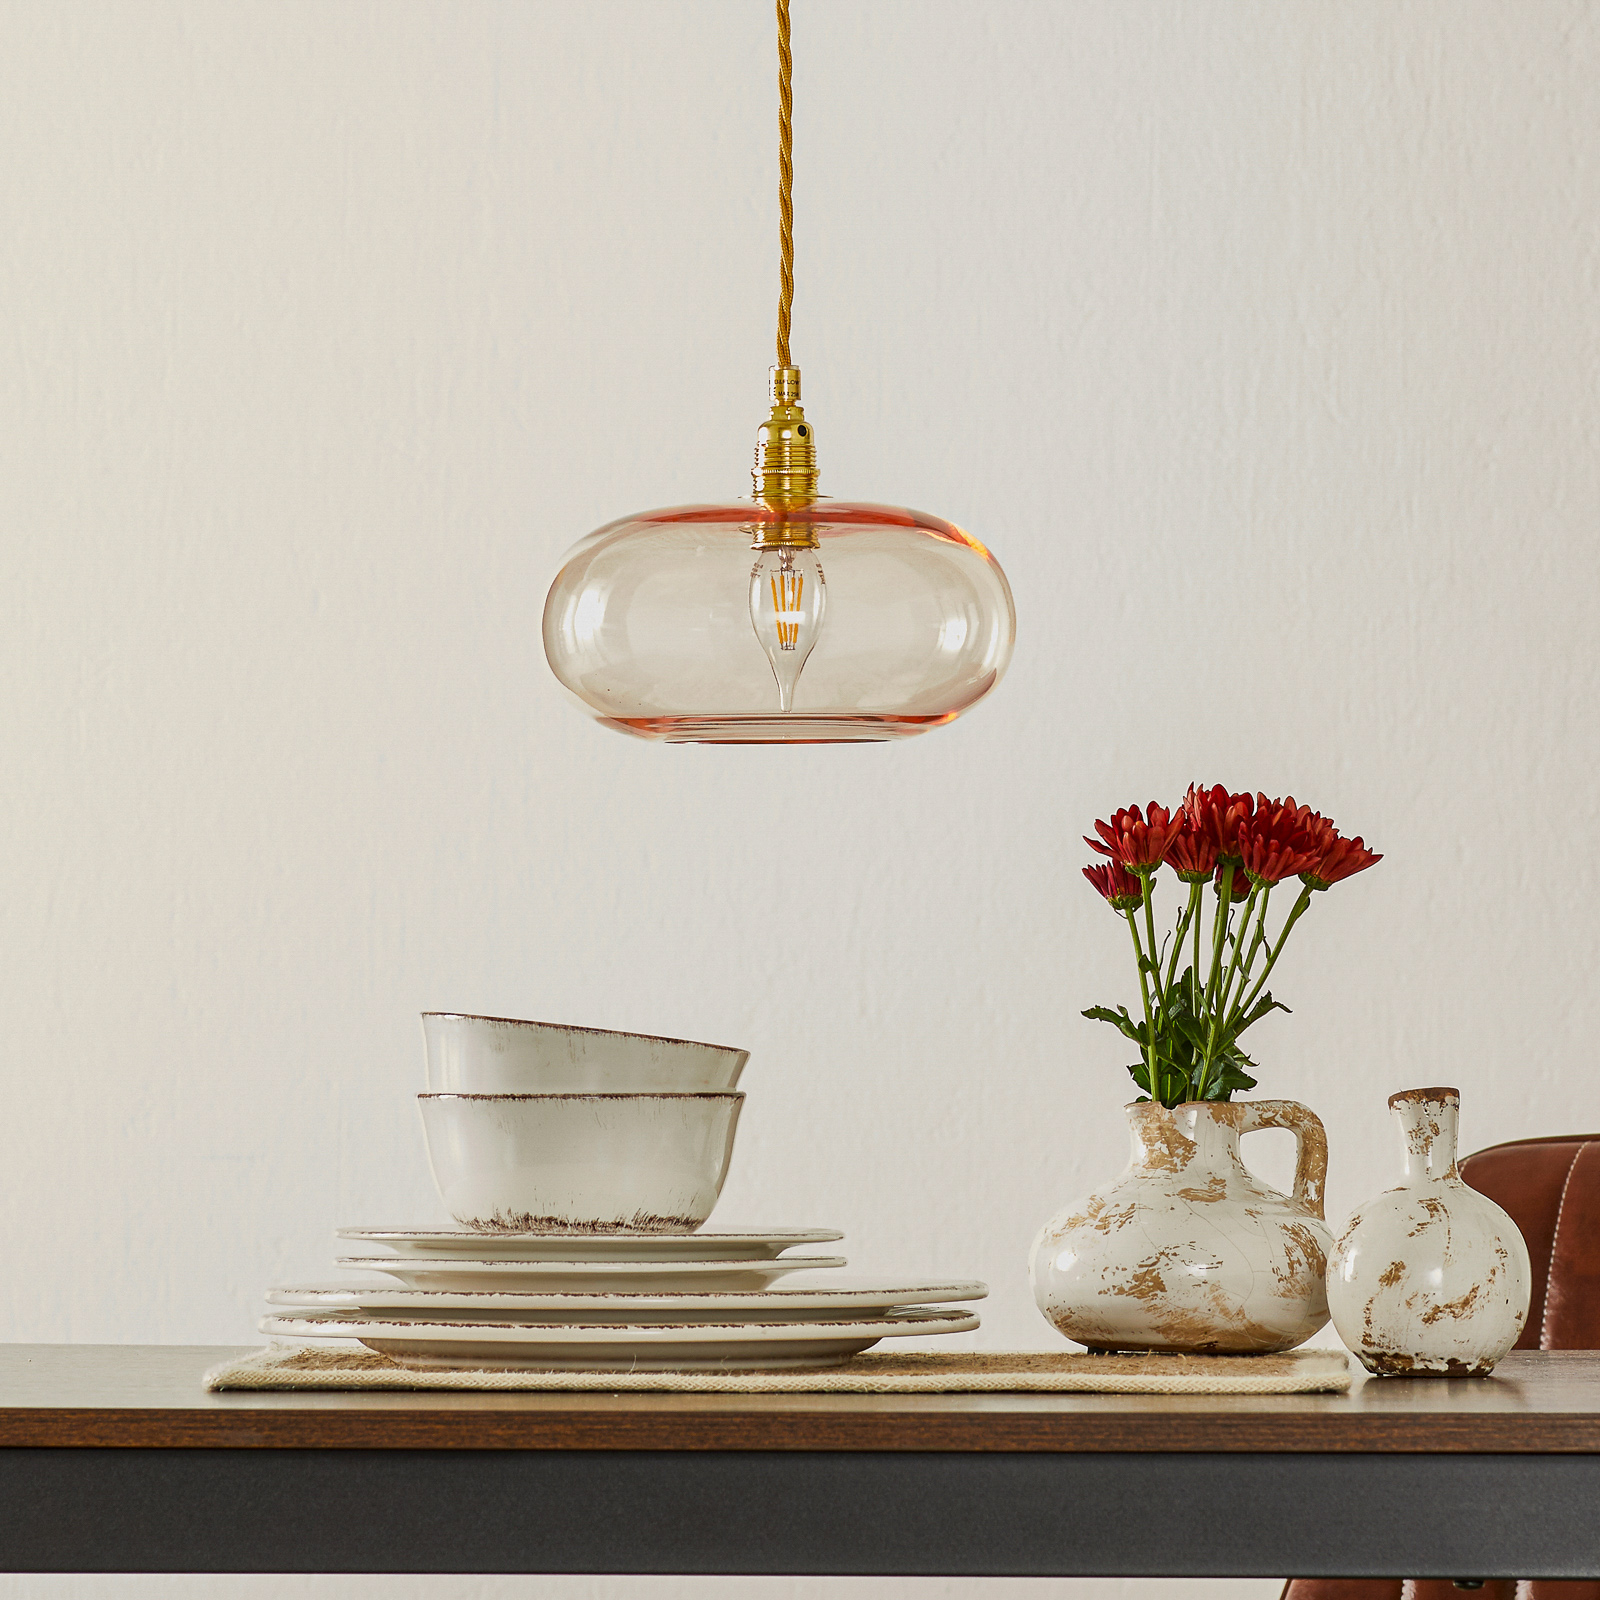 EBB & FLOW Horizon hanglamp rosé-goud Ø 21cm